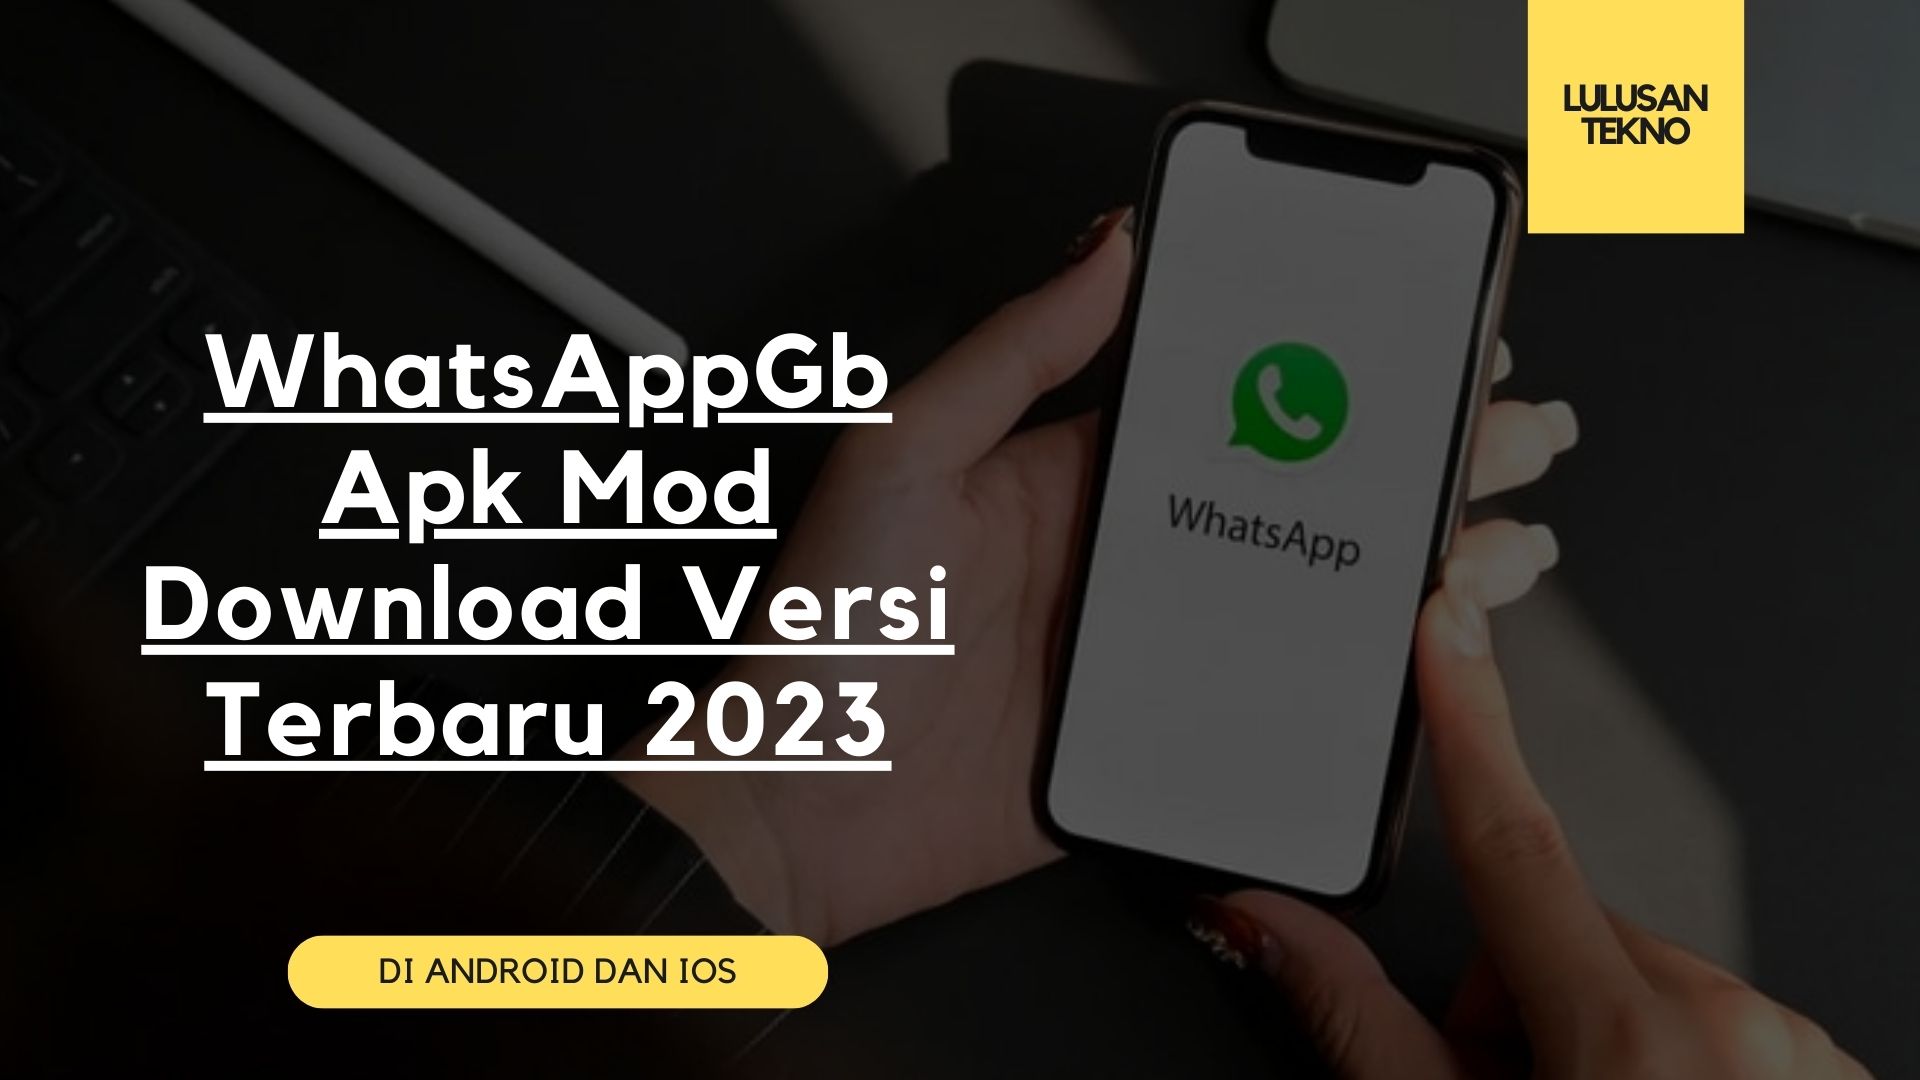 WhatsAppGb Apk Mod Download Versi Terbaru 2023